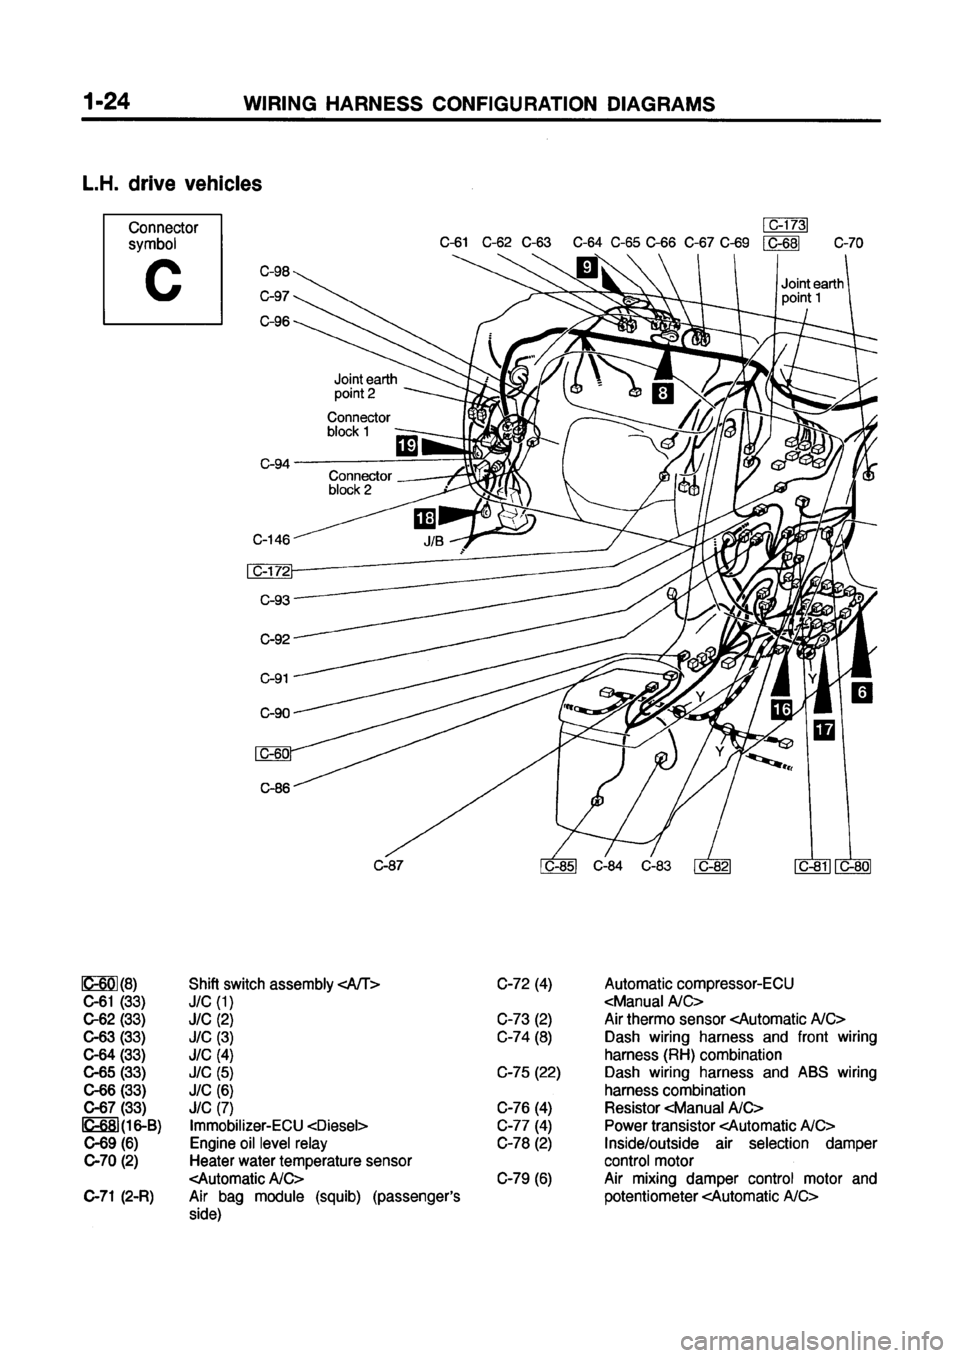 1999 Mitsubishi Galant Wiring Diagram